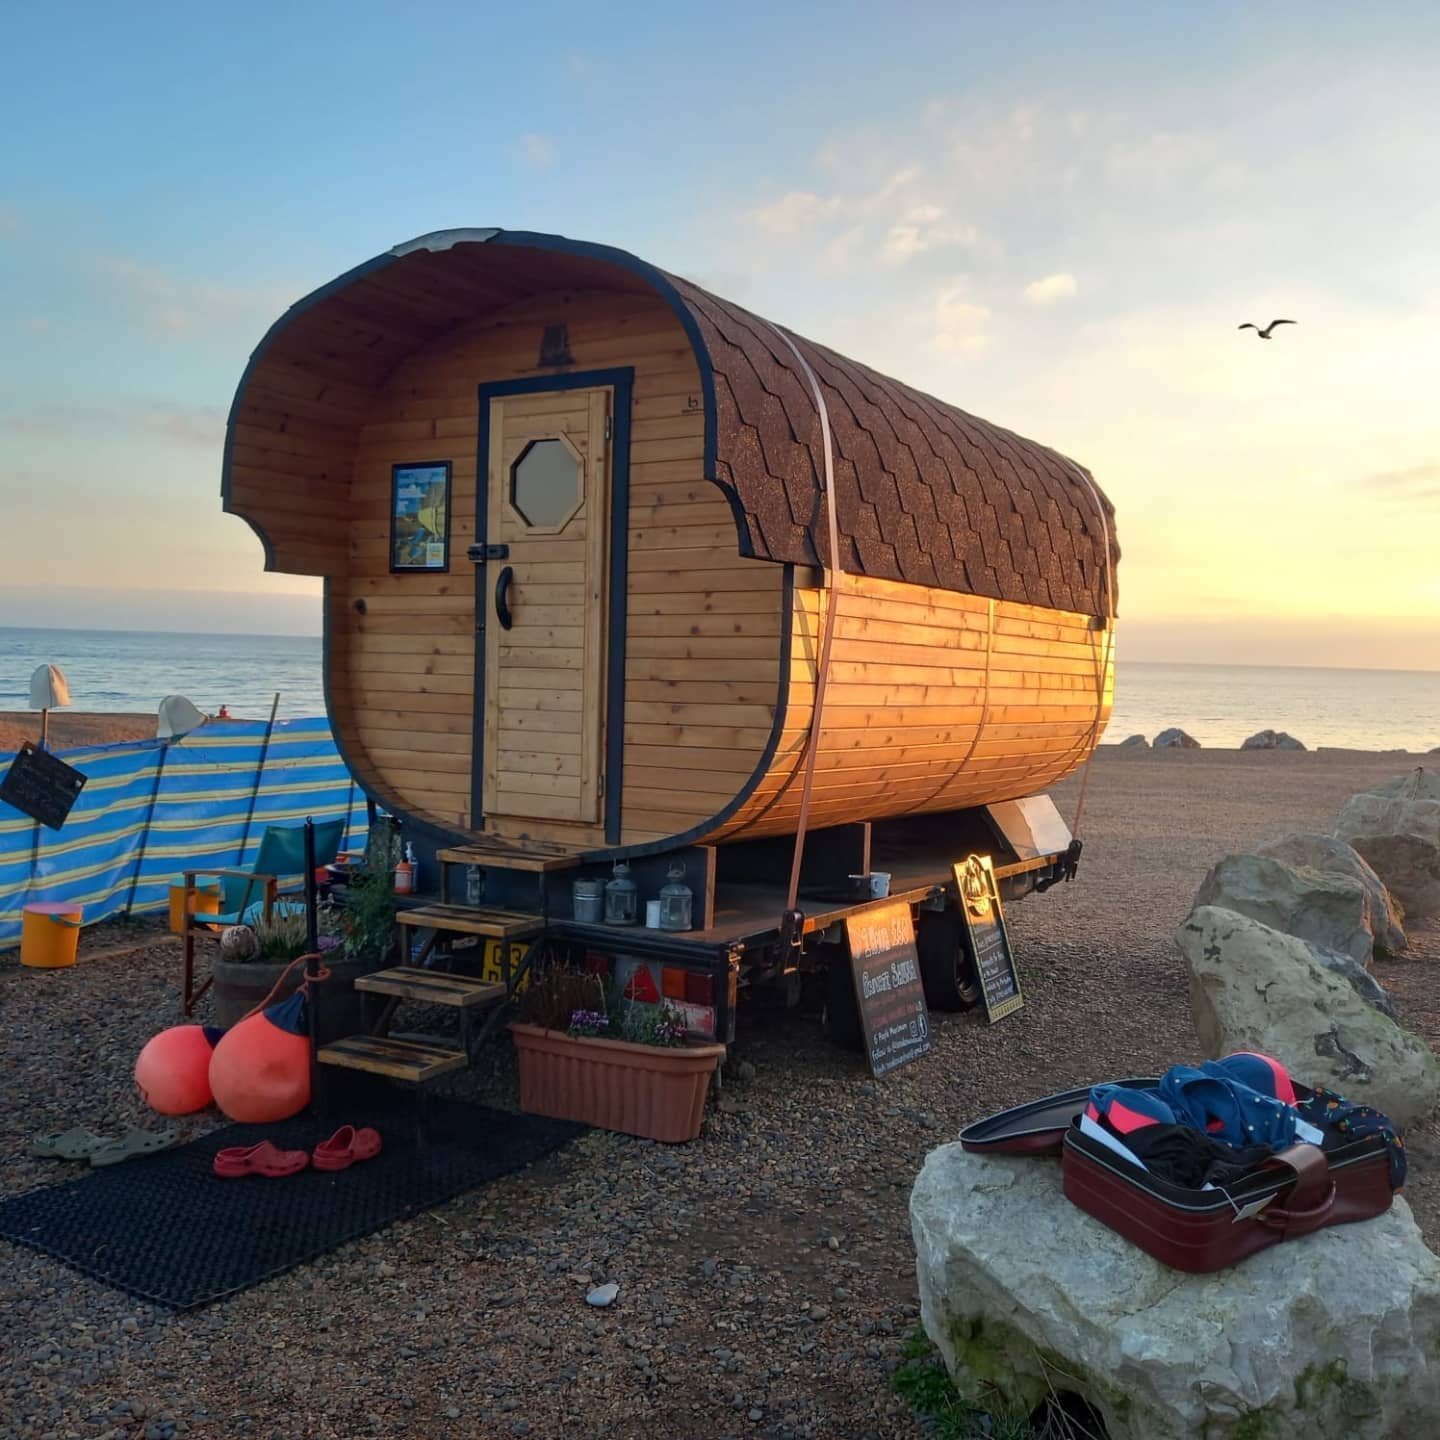 SeasideSaunaHaus Book a mobile sauna in england